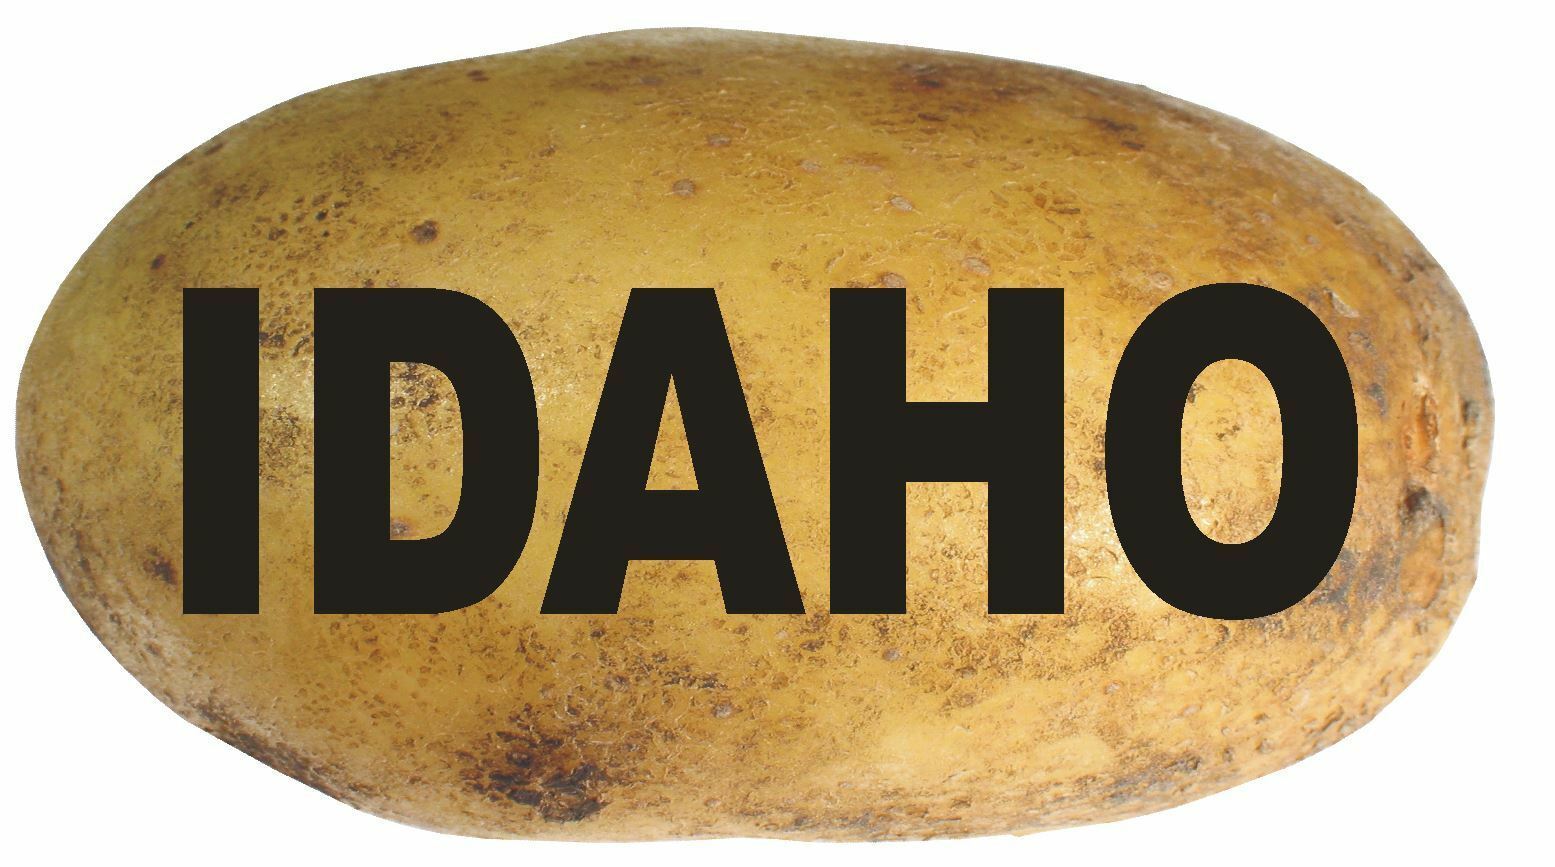 Primary image for Idaho Oval Bumper Sticker or Helmet Sticker D2328 State Euro Oval Potato